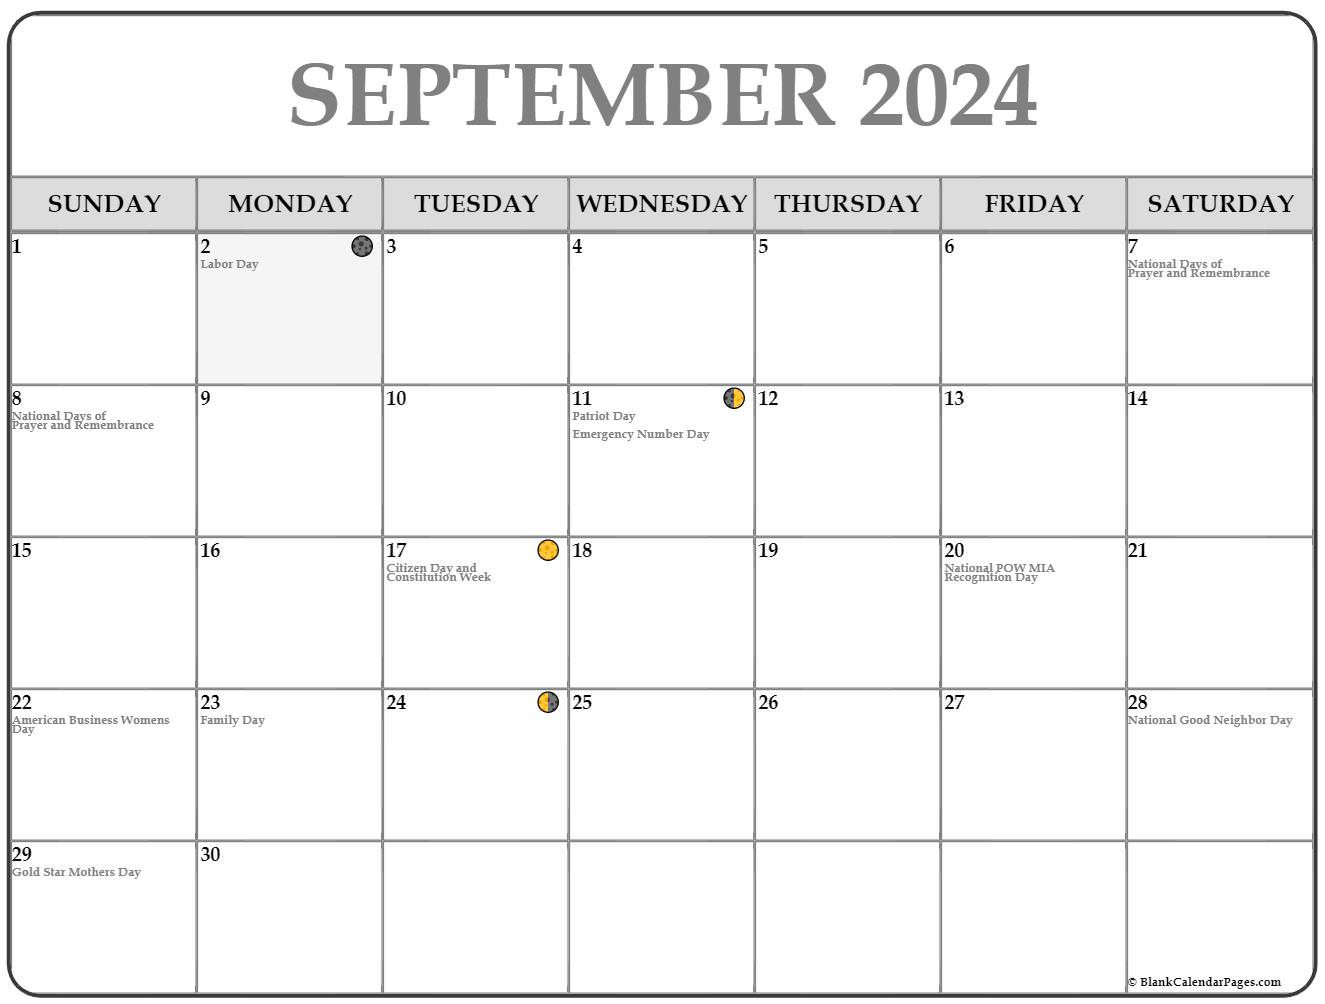 Moon Calendar September 2022 September 2021 Lunar Calendar | Moon Phase Calendar